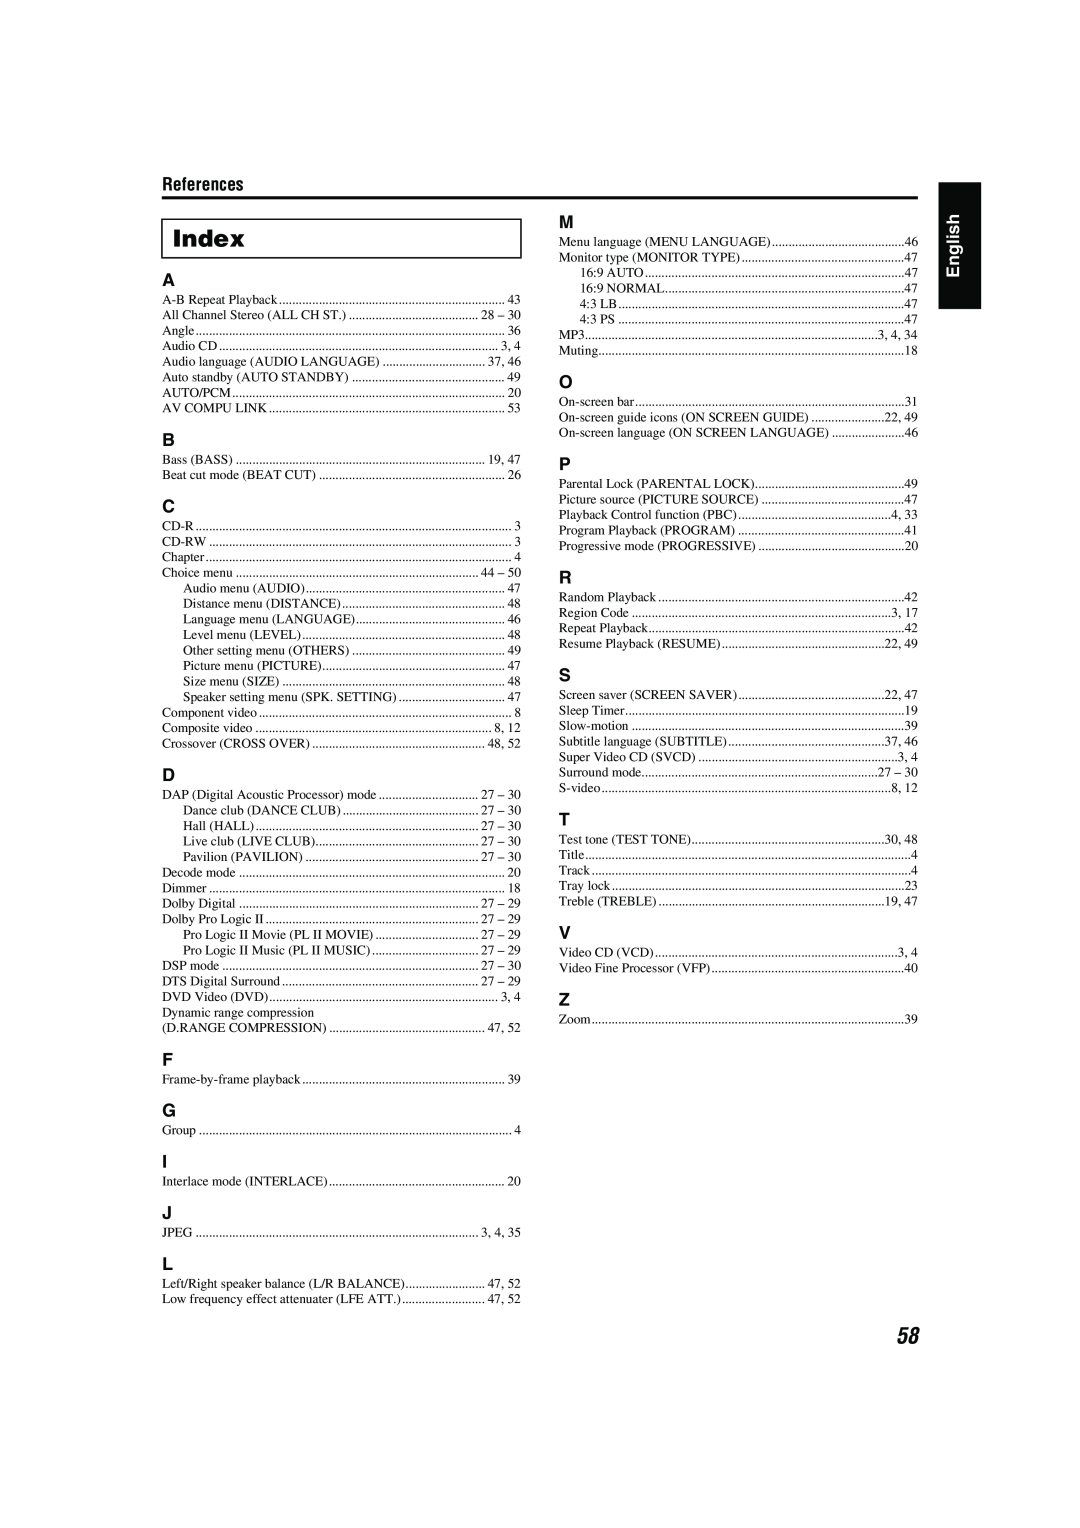 JVC TH-M42 manual Index, References, English 